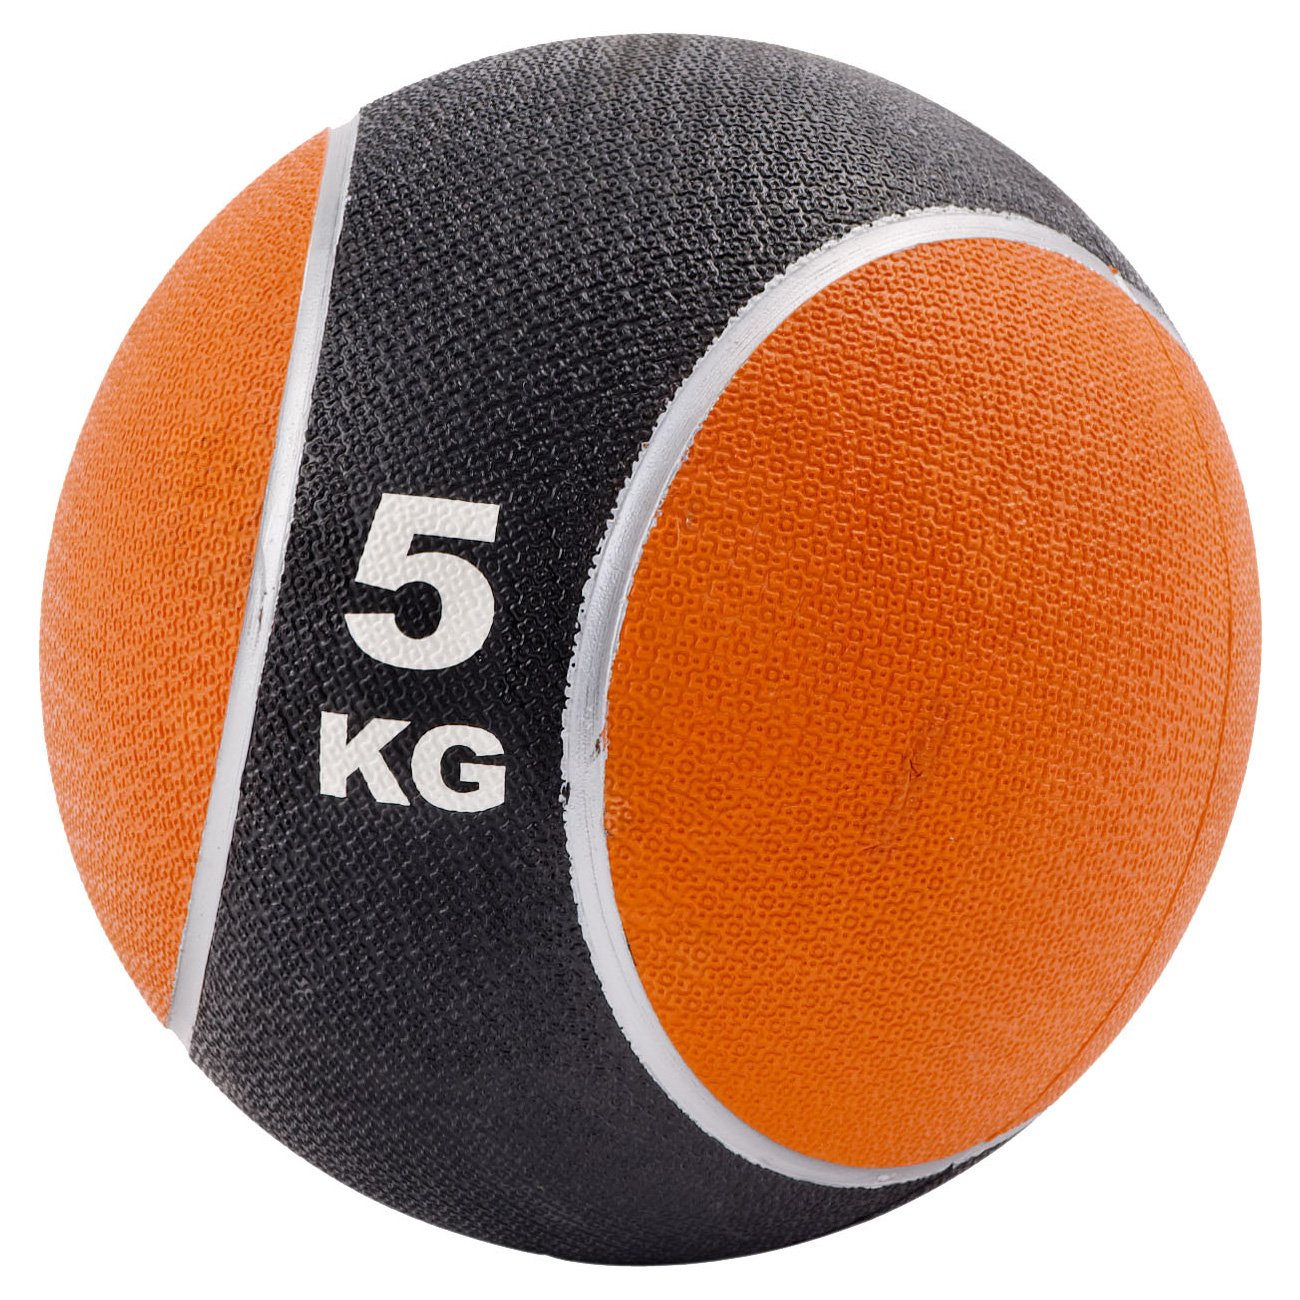 York 5kg Medicine Ball